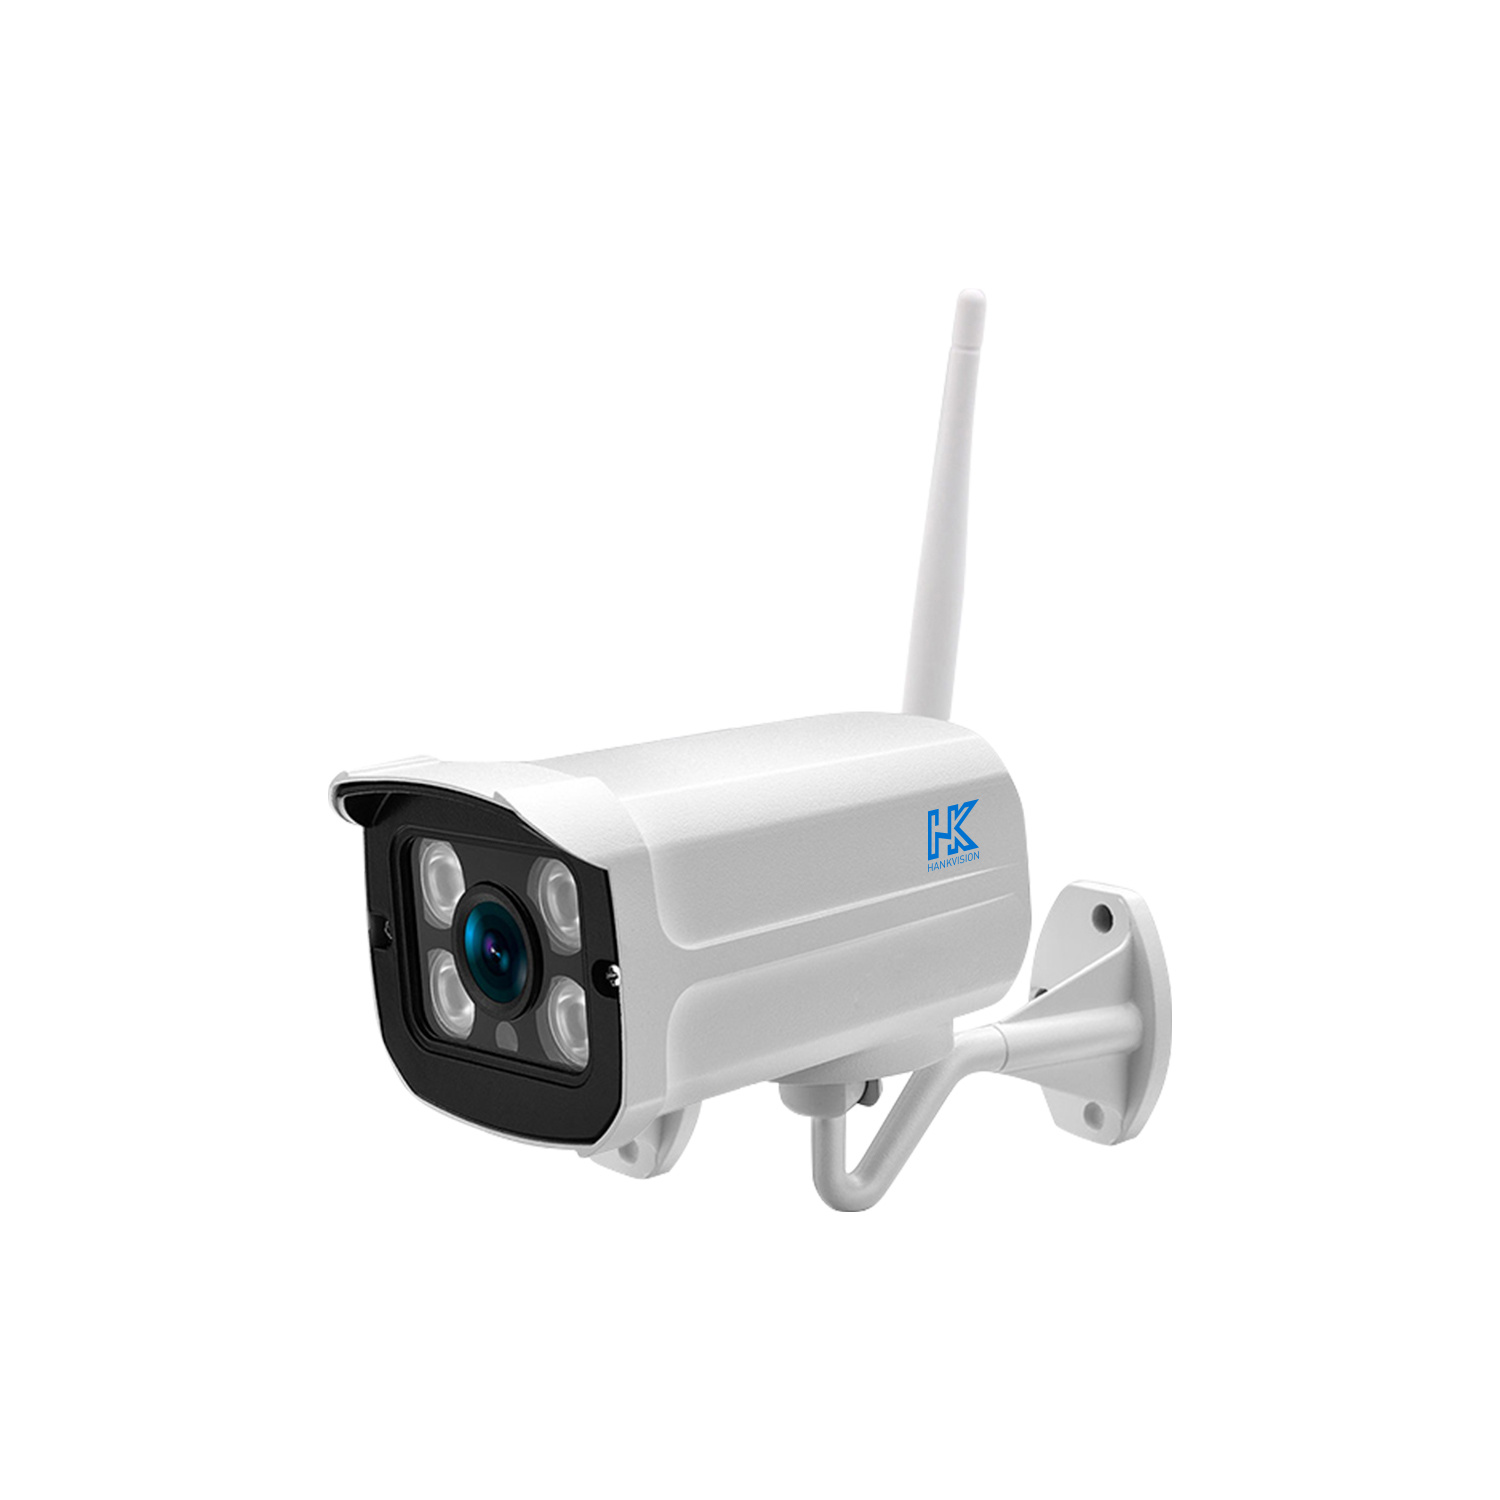 Hankvision WiFi NVR Kit 10" LCD Screen Wireless Kit Security Cameras 4CH 2MP 2.4G Tuya IP66 Waterproof